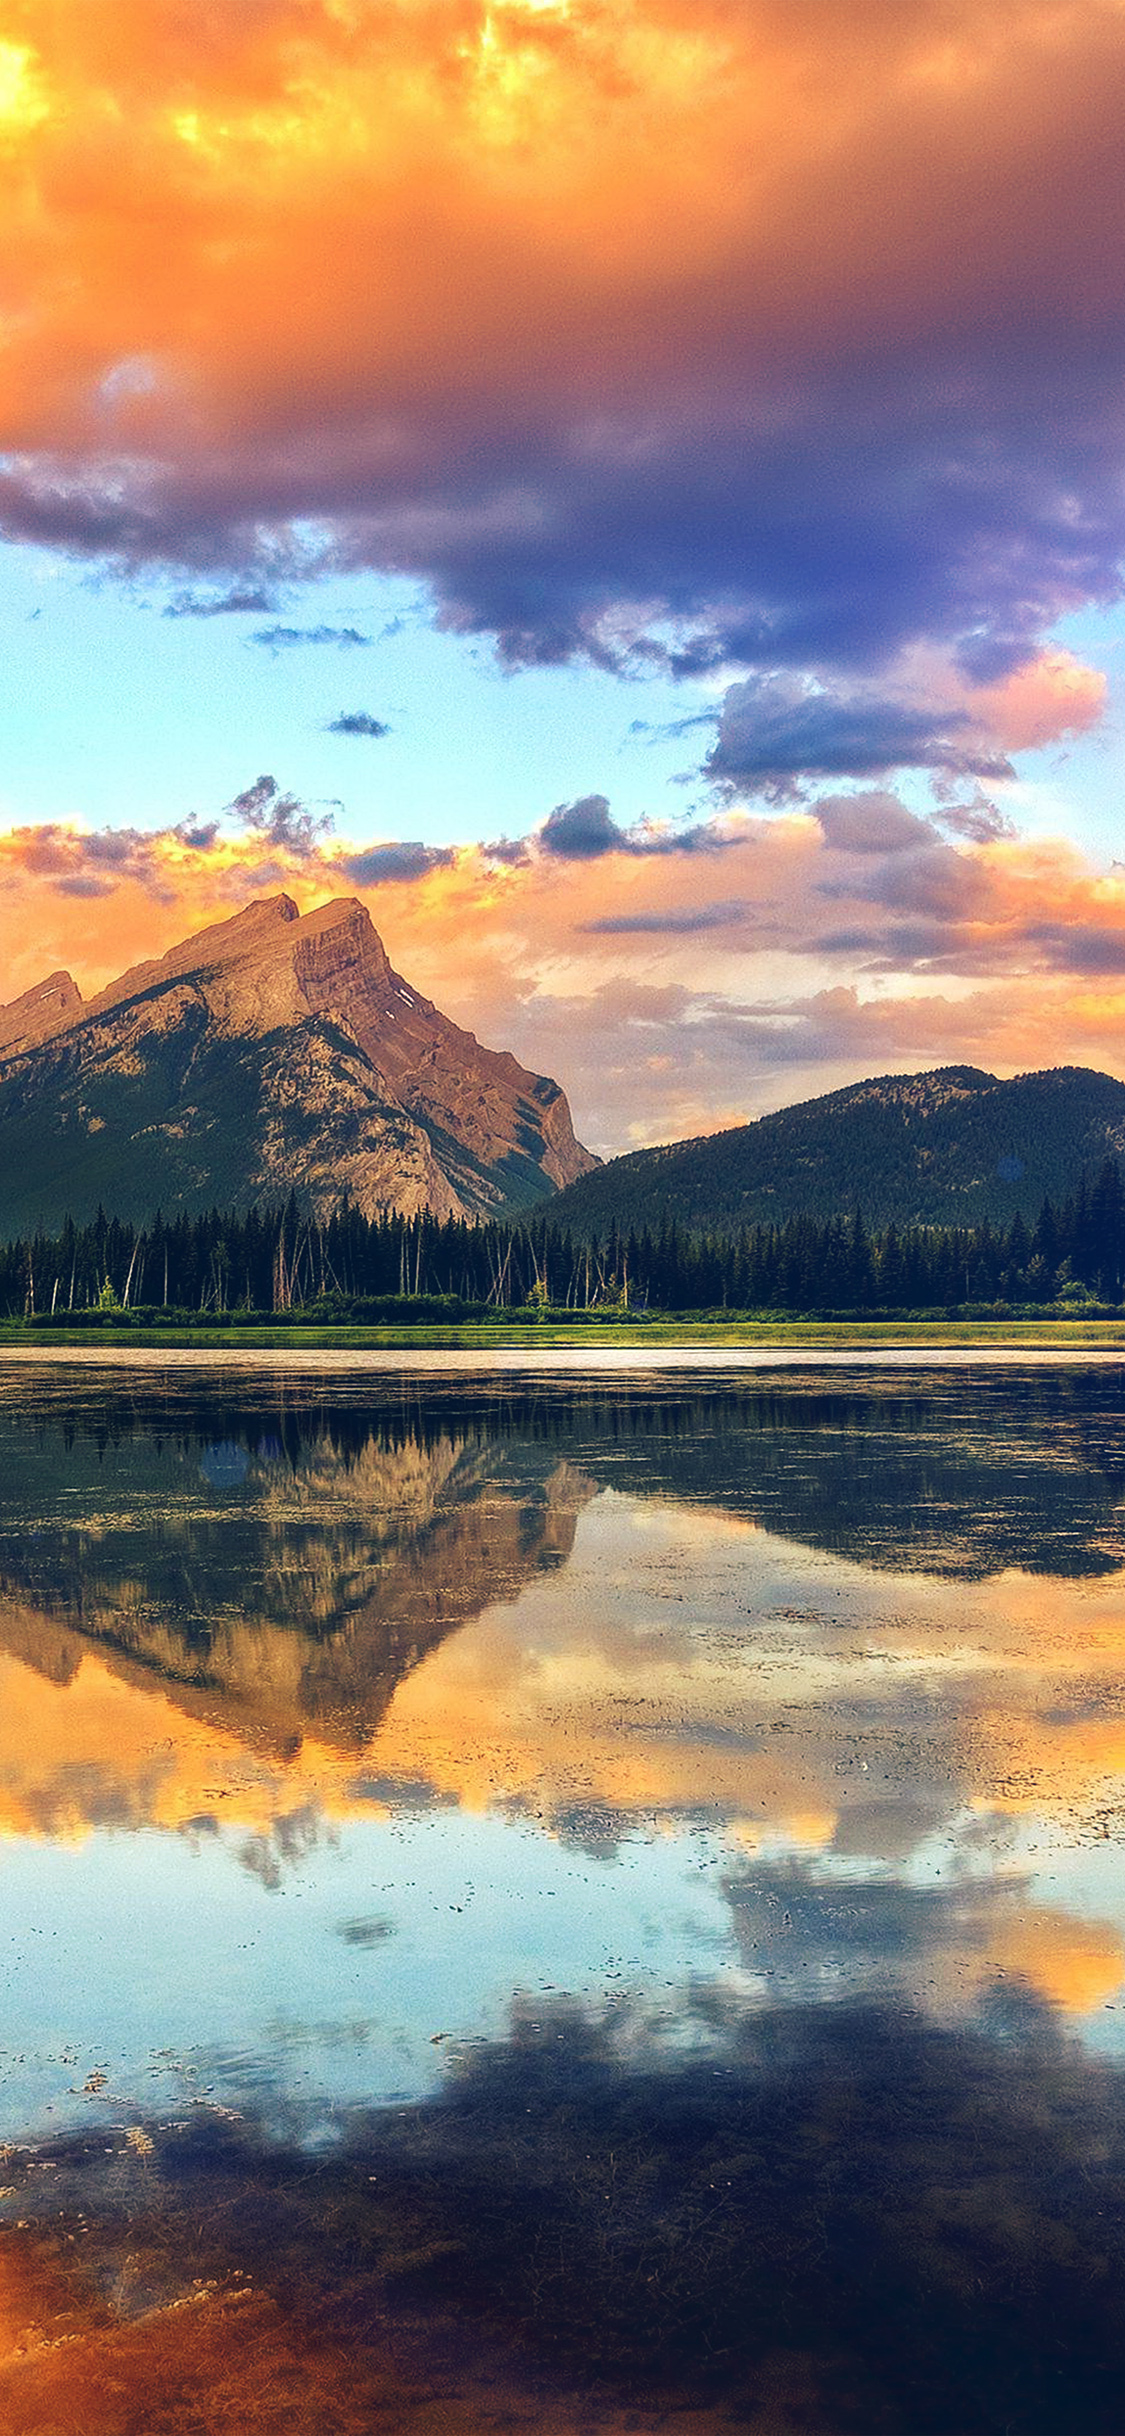 iPhone X wallpaper. mountain lake sunset nature summer flare gold